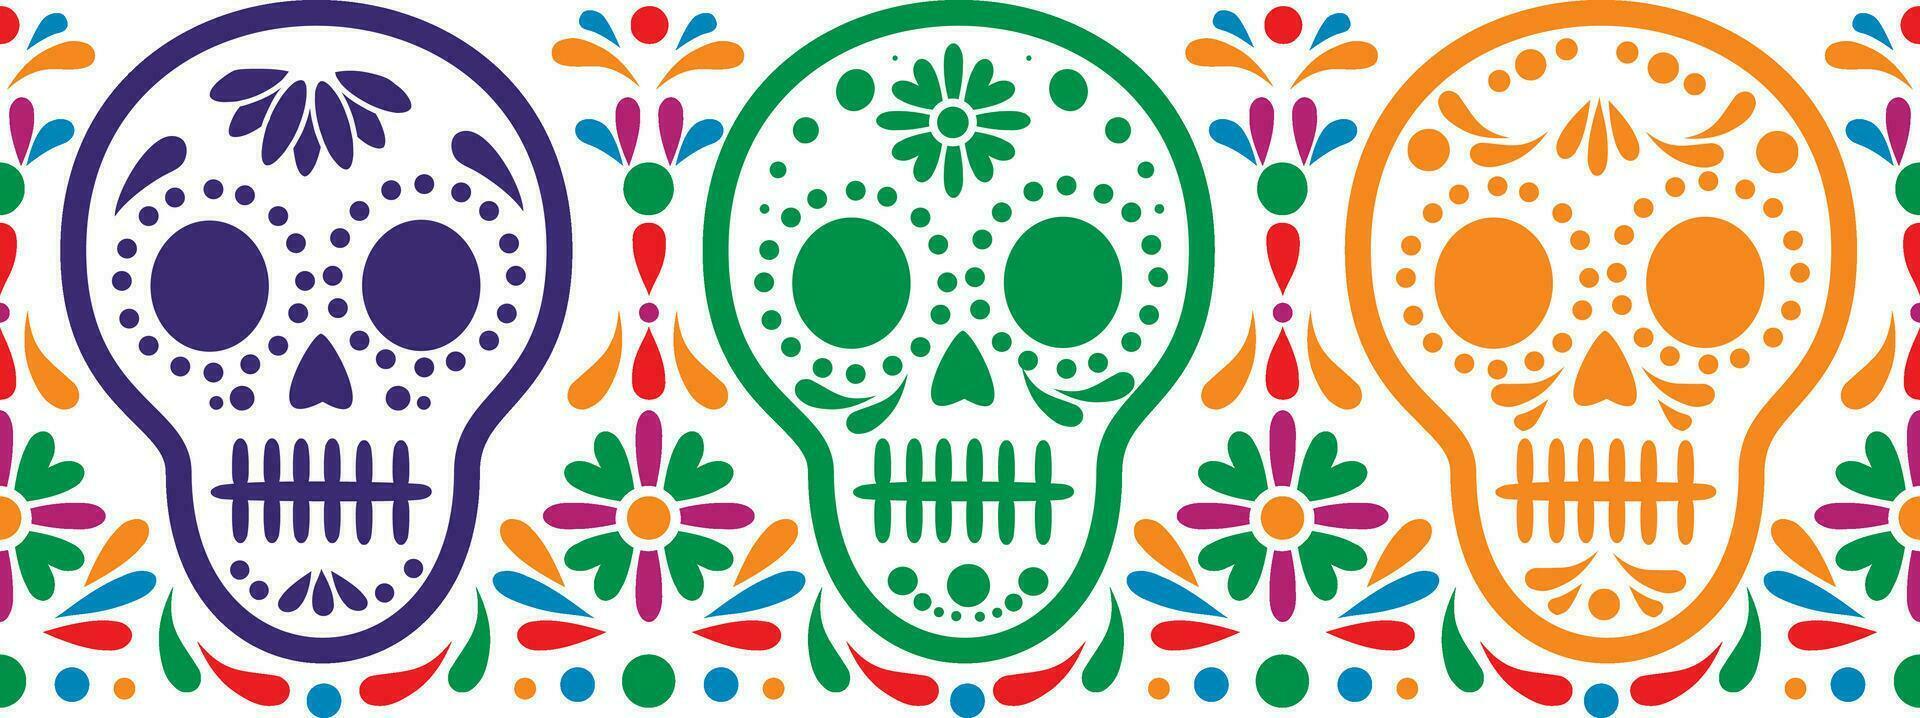 set mexican sugar skull vector